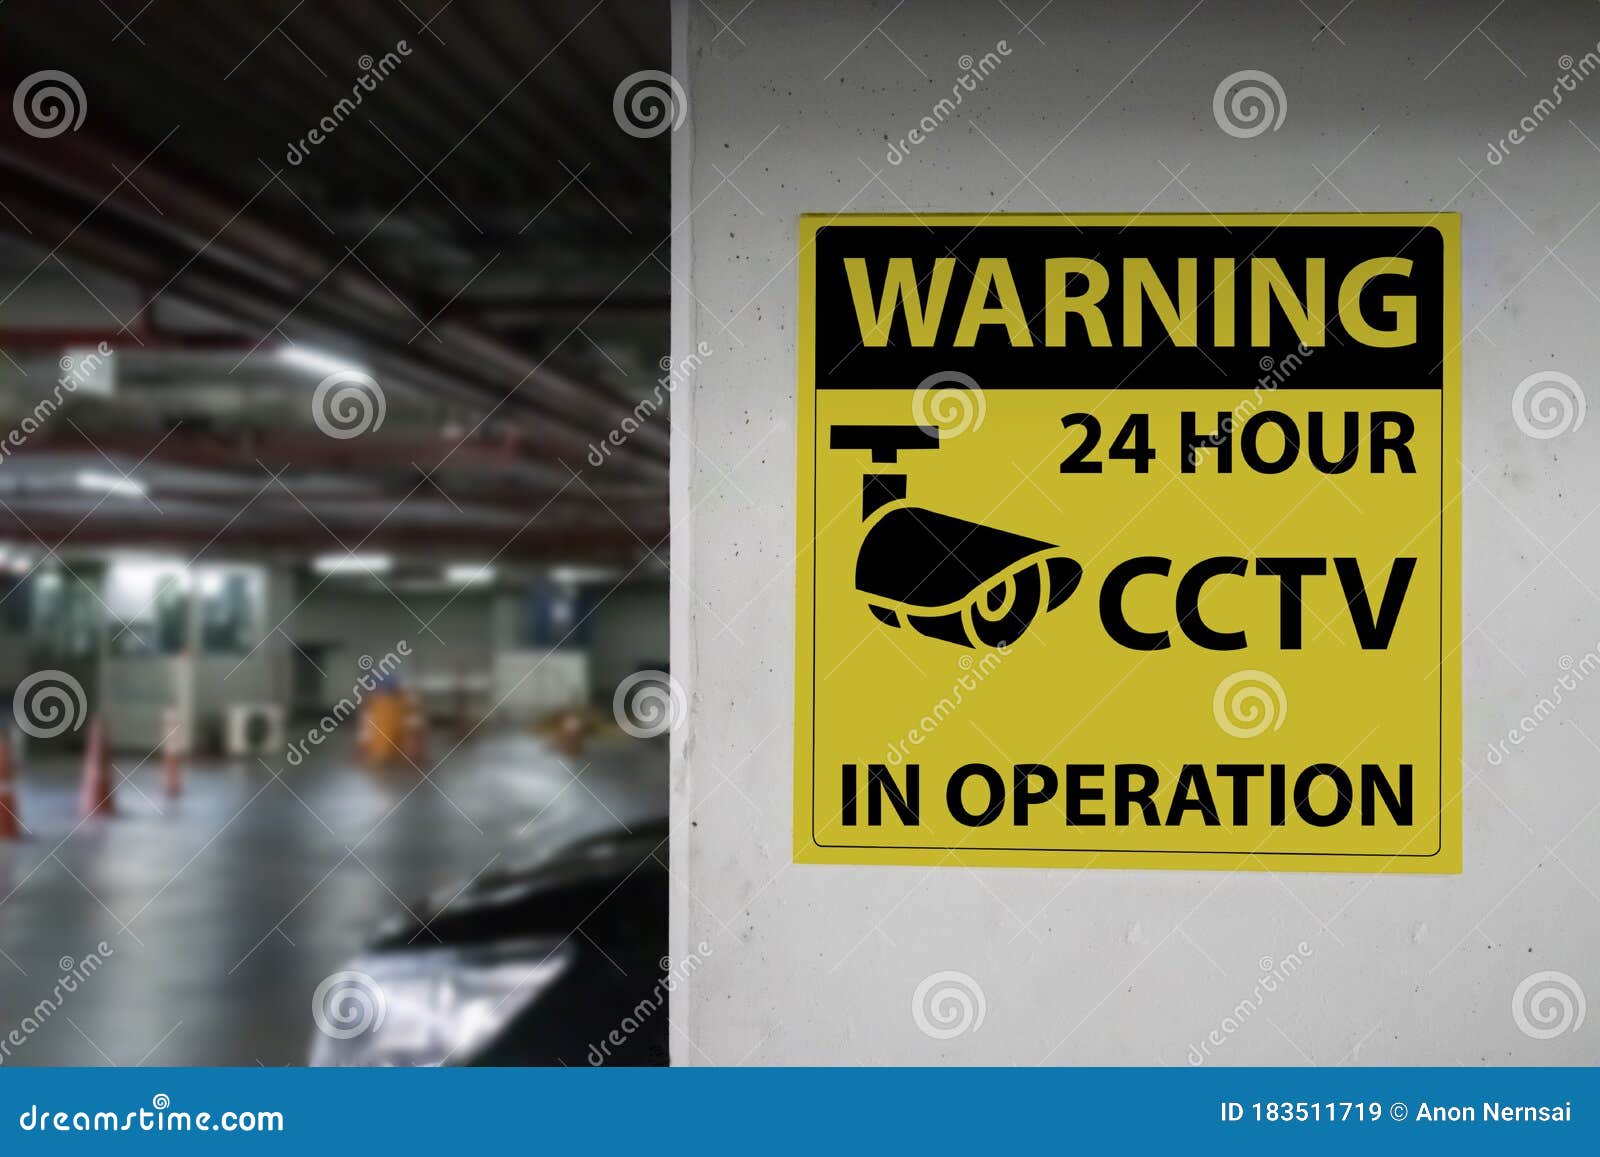 Warning Premises Protected 24 Hour CCTV safety metal park safety sign 